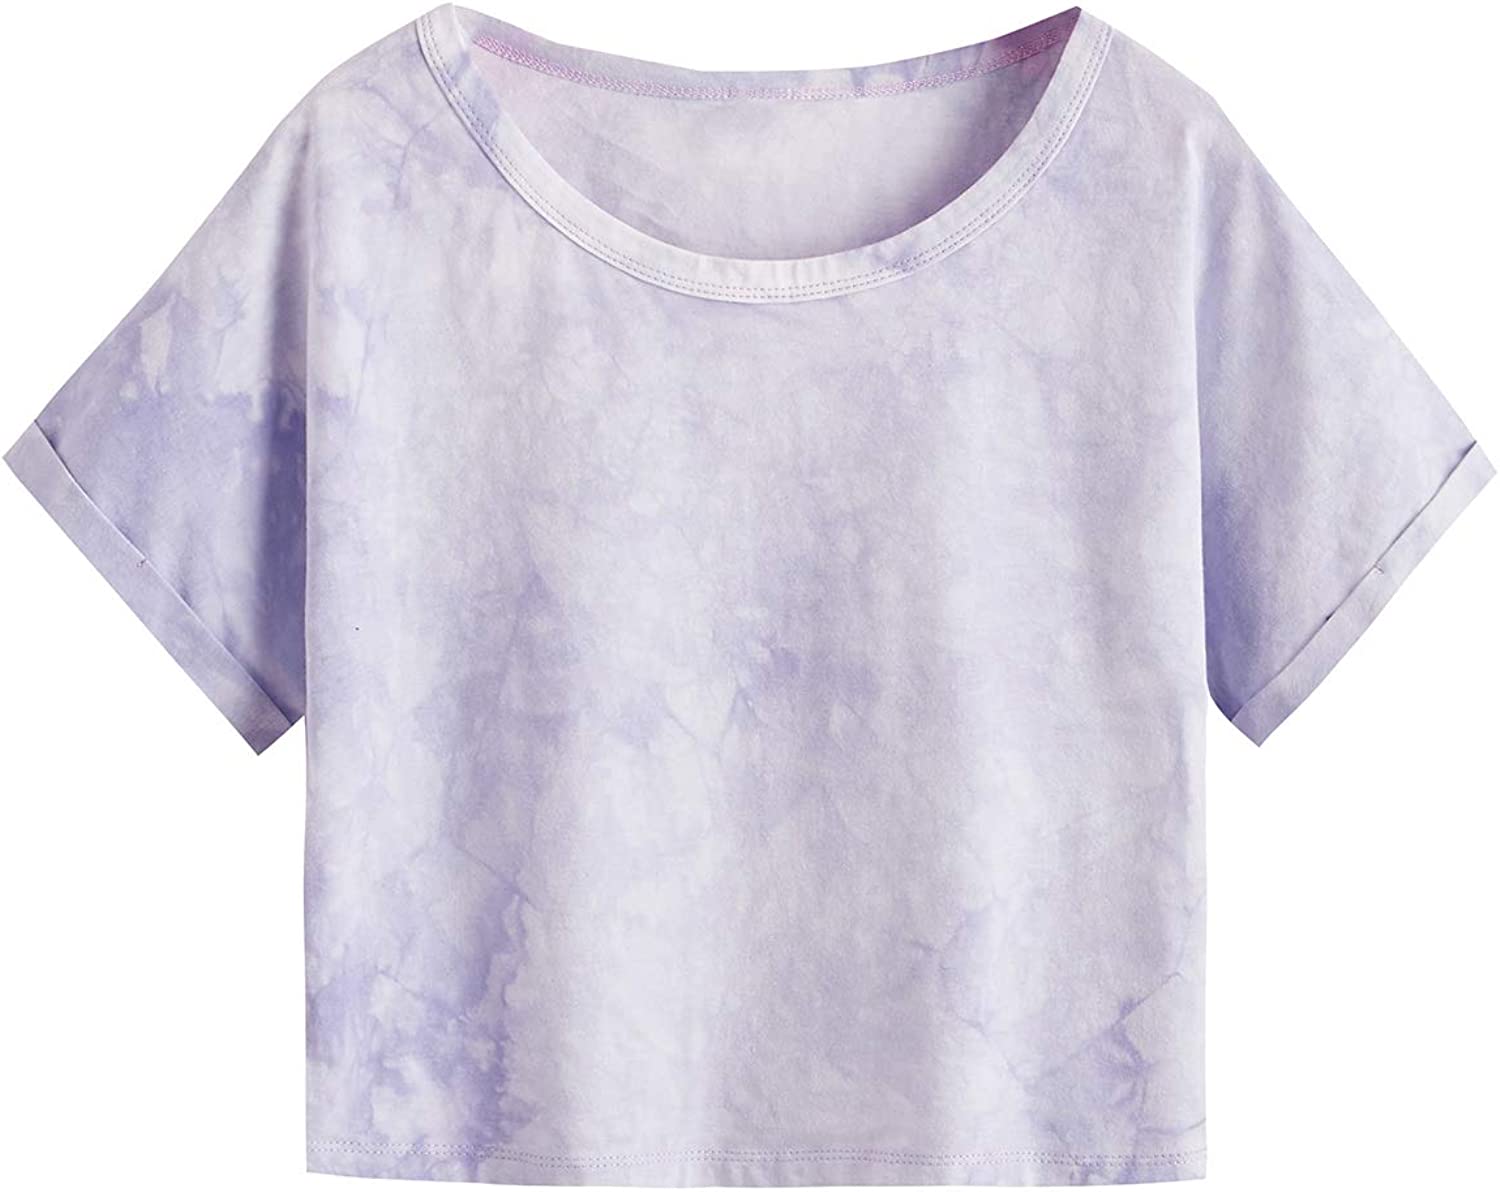 SweatyRocks Women's Round Neck Short Sleeve Casual Tie Dye Crop Top T-Shirt